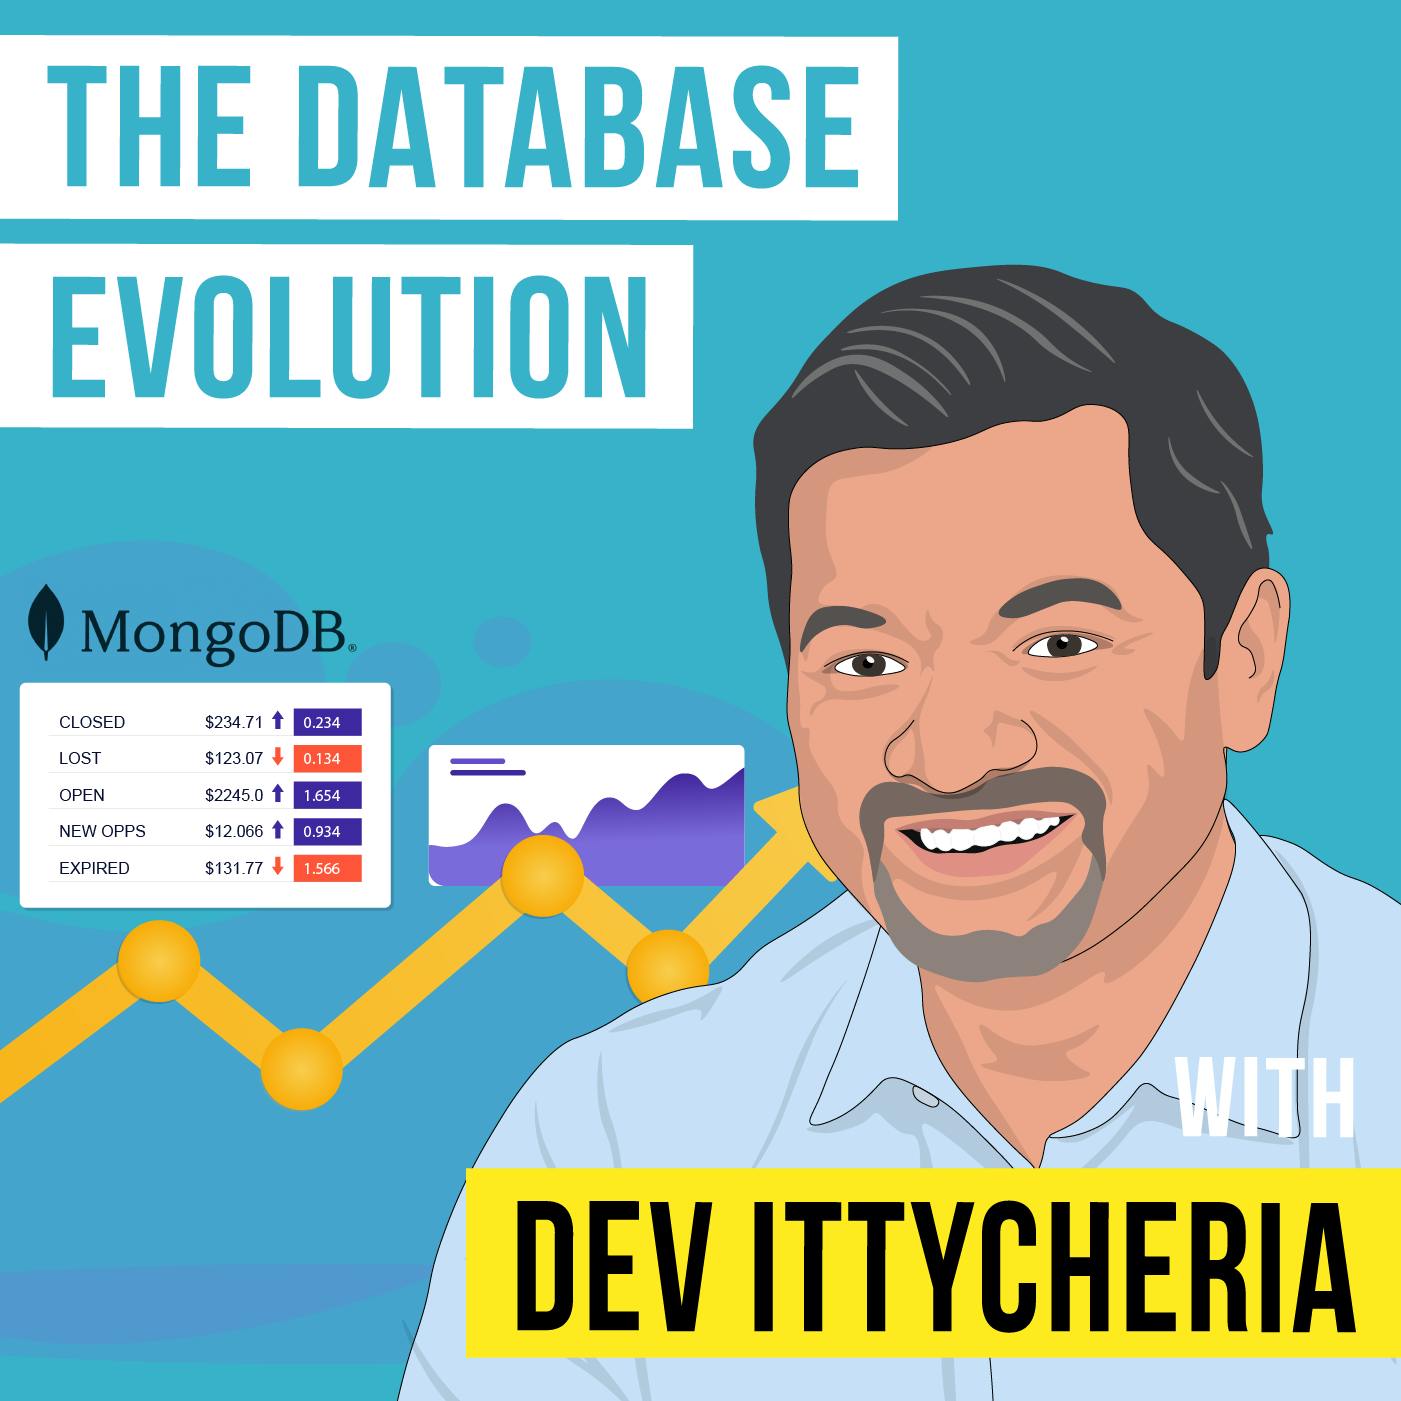 Dev Ittycheria - The Database Evolution - [Invest Like the Best, EP.373]